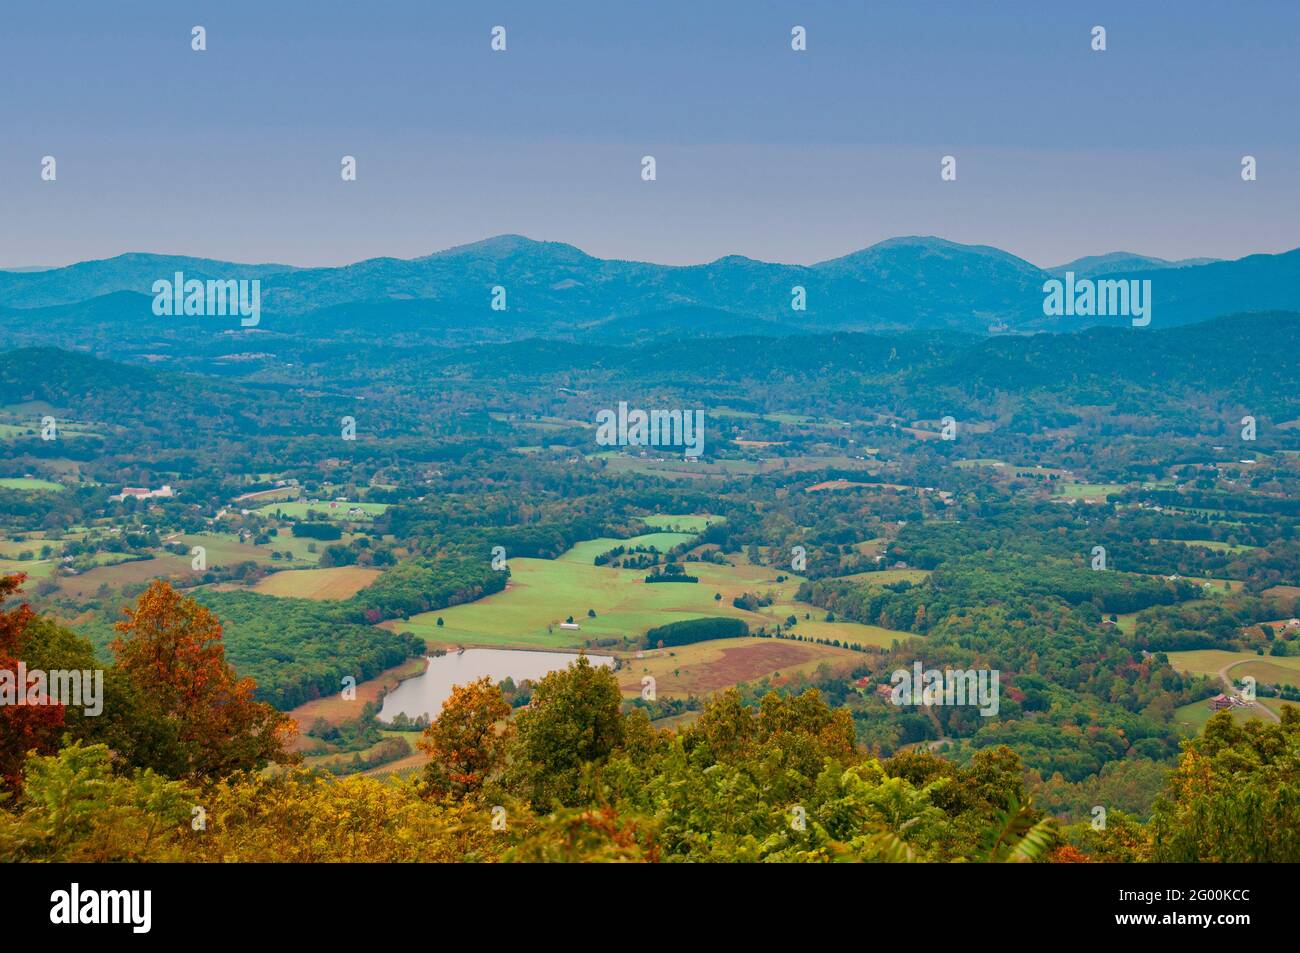 Vista de Afton en las montañas Blue Ridge, o Blue Ridge Parkway, parte de la cadena de montañas Appalachian cerca de Afton Virginia, Estados Unidos. Foto de stock